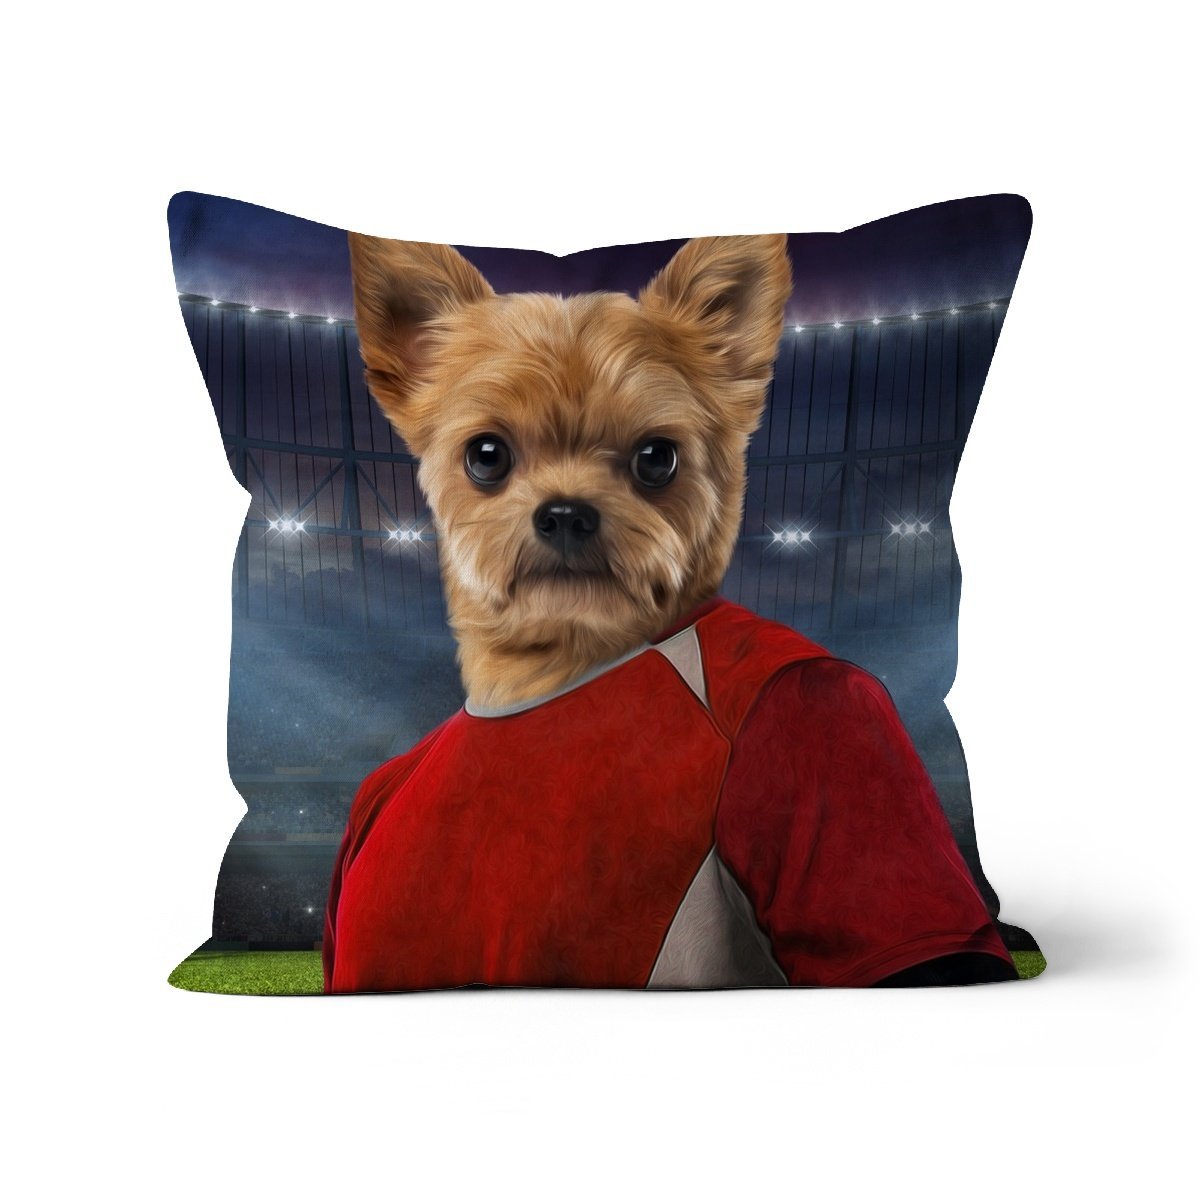 The Football Player: Custom Pet Cushion - Paw & Glory - #pet portraits# - #dog portraits# - #pet portraits uk#paw & glory, pet portraits pillow,pet custom pillow, pillows of your dog, custom pillow of pet, dog on pillow, dog photo on pillow